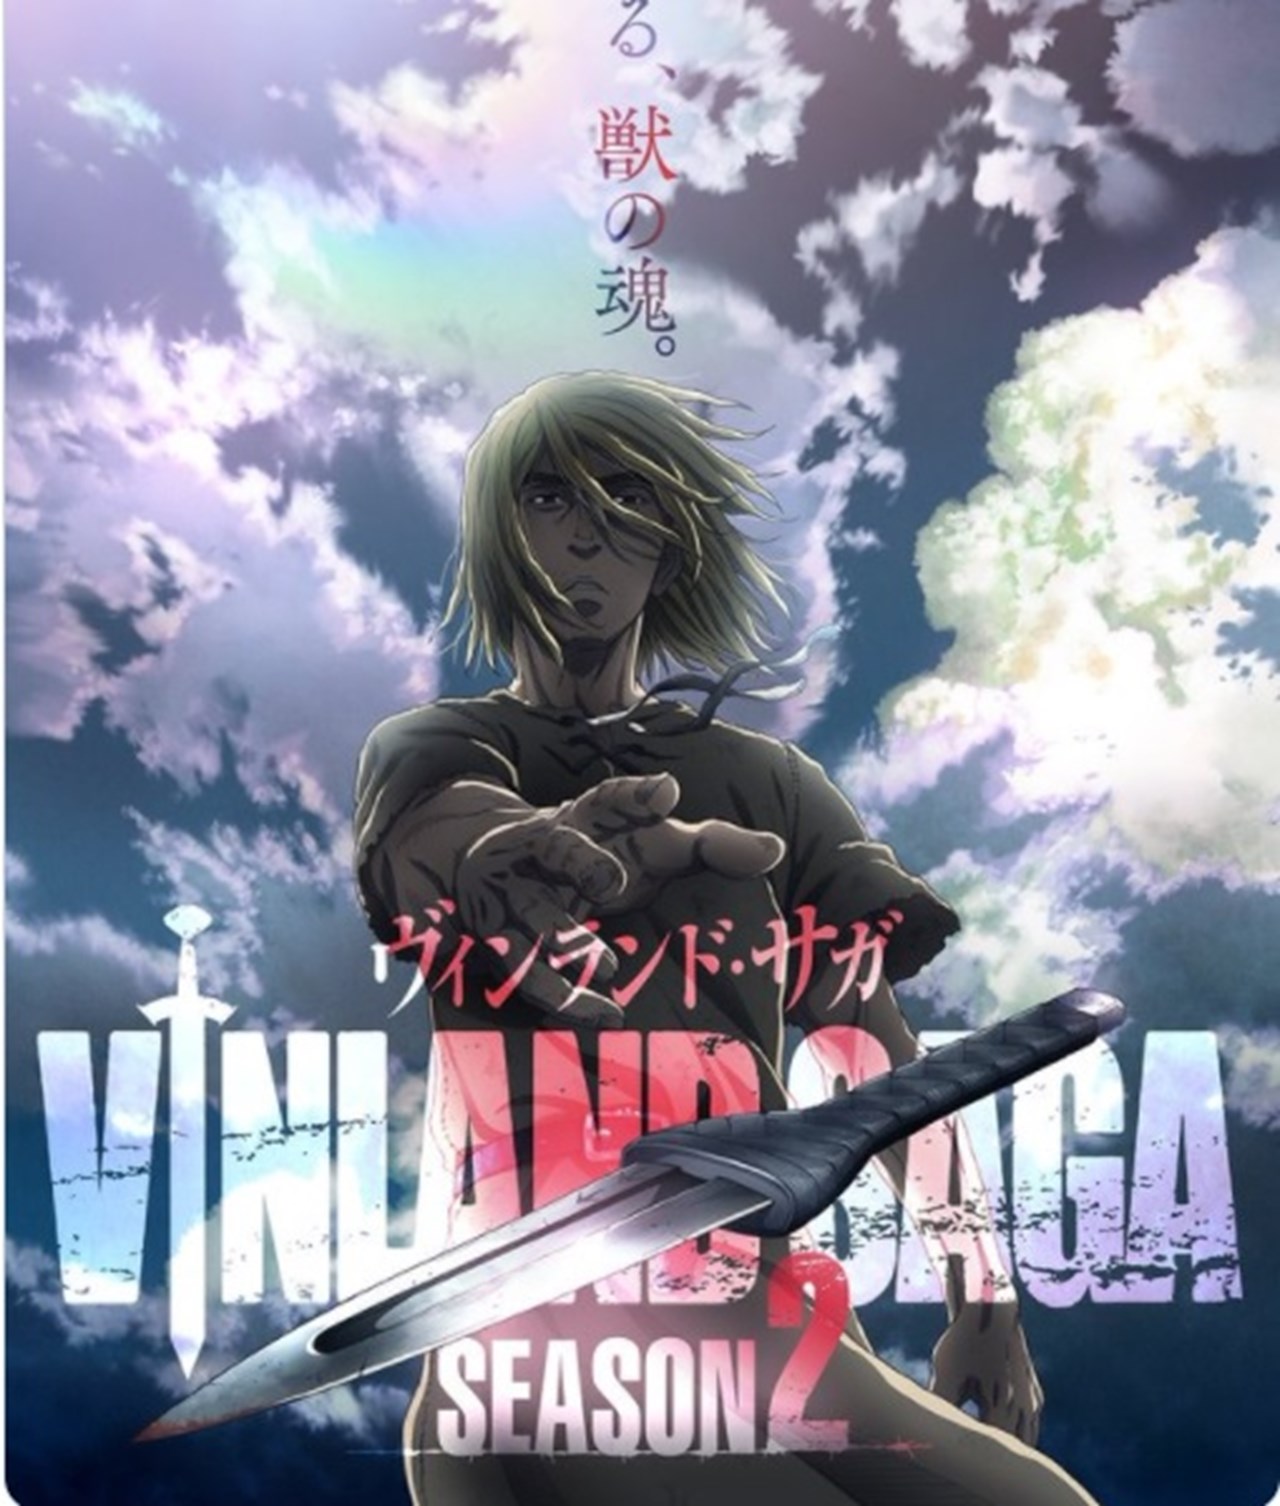 Vinland Saga Season 2 Episode 13 - Anime Series Review